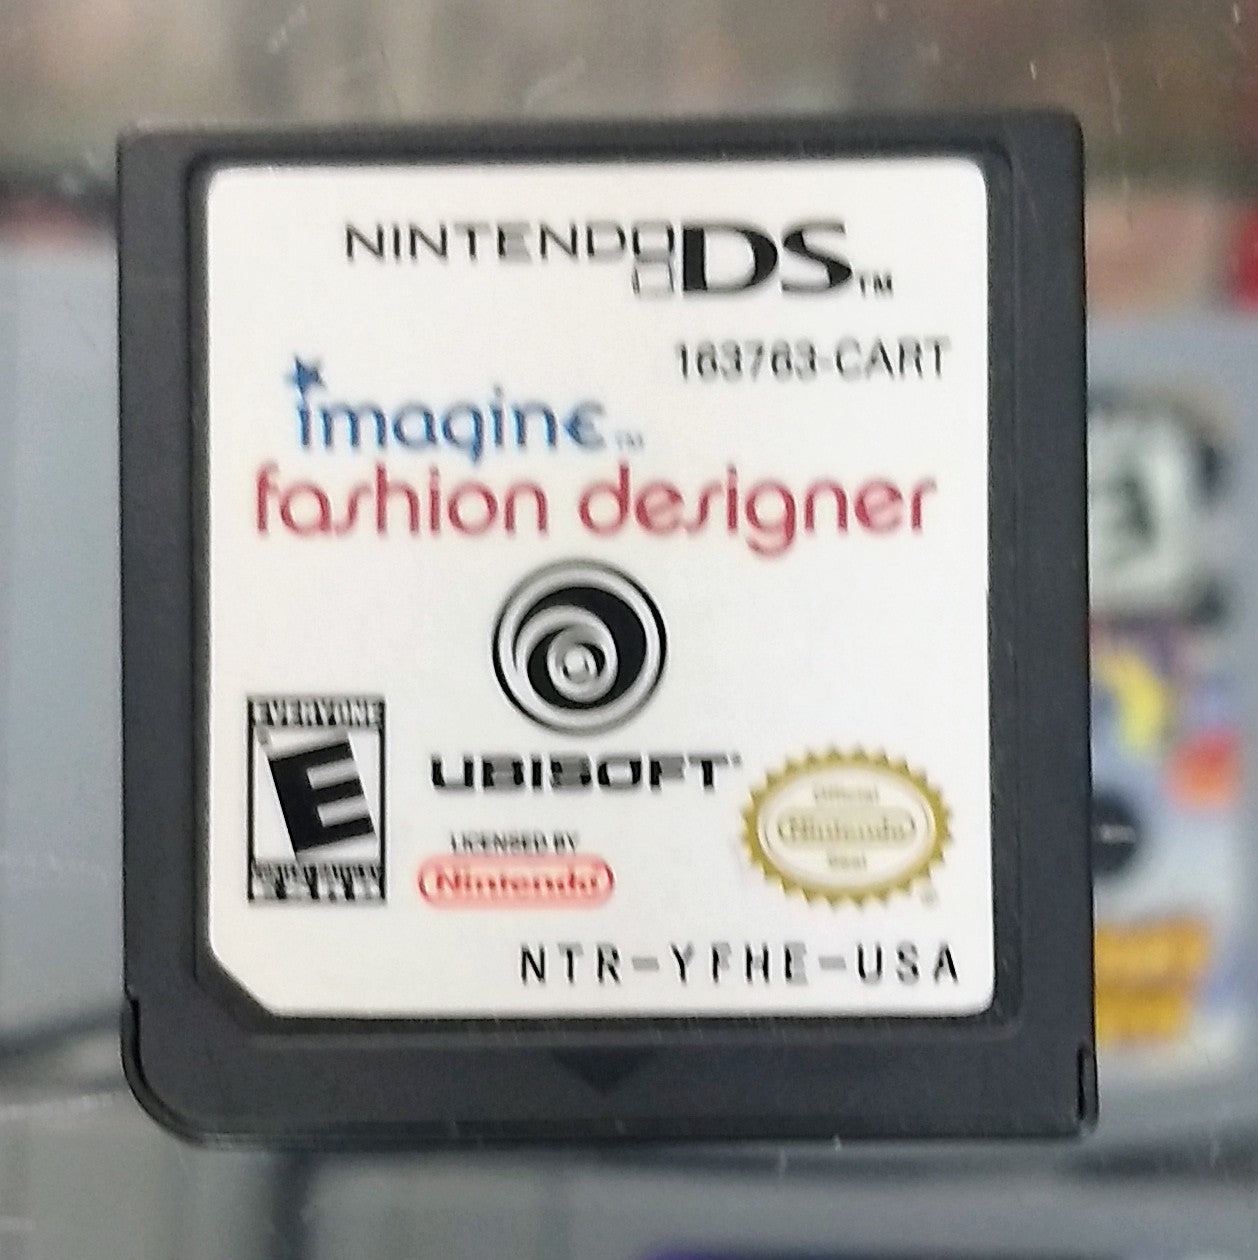 IMAGINE FASHION DESIGNER NINTENDO DS - jeux video game-x